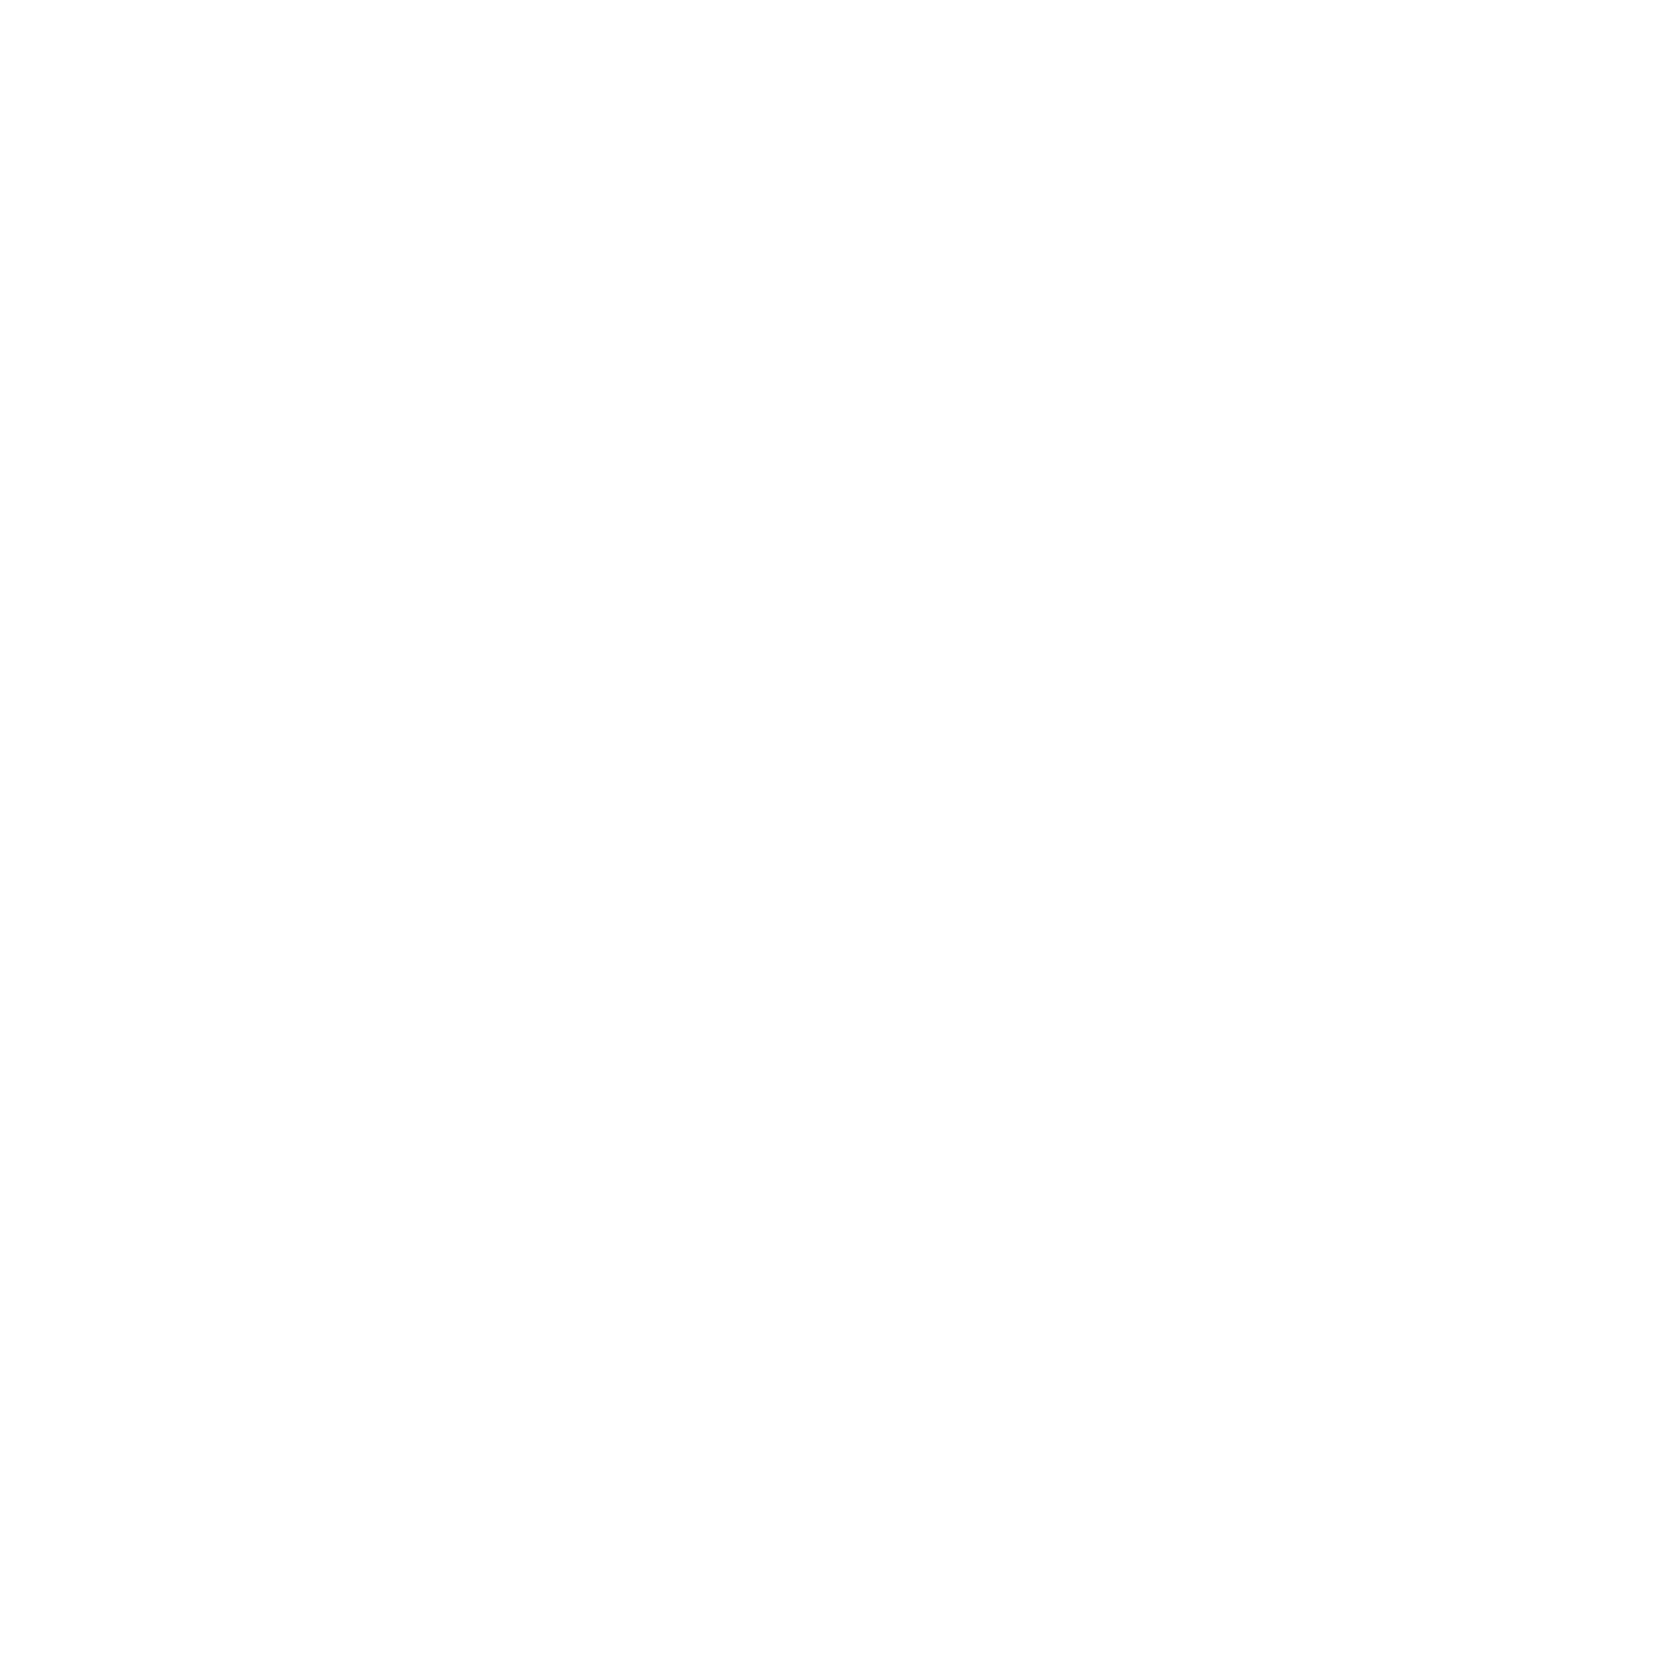 white icon of smiling emoji, text box, heart emoji and star emoji